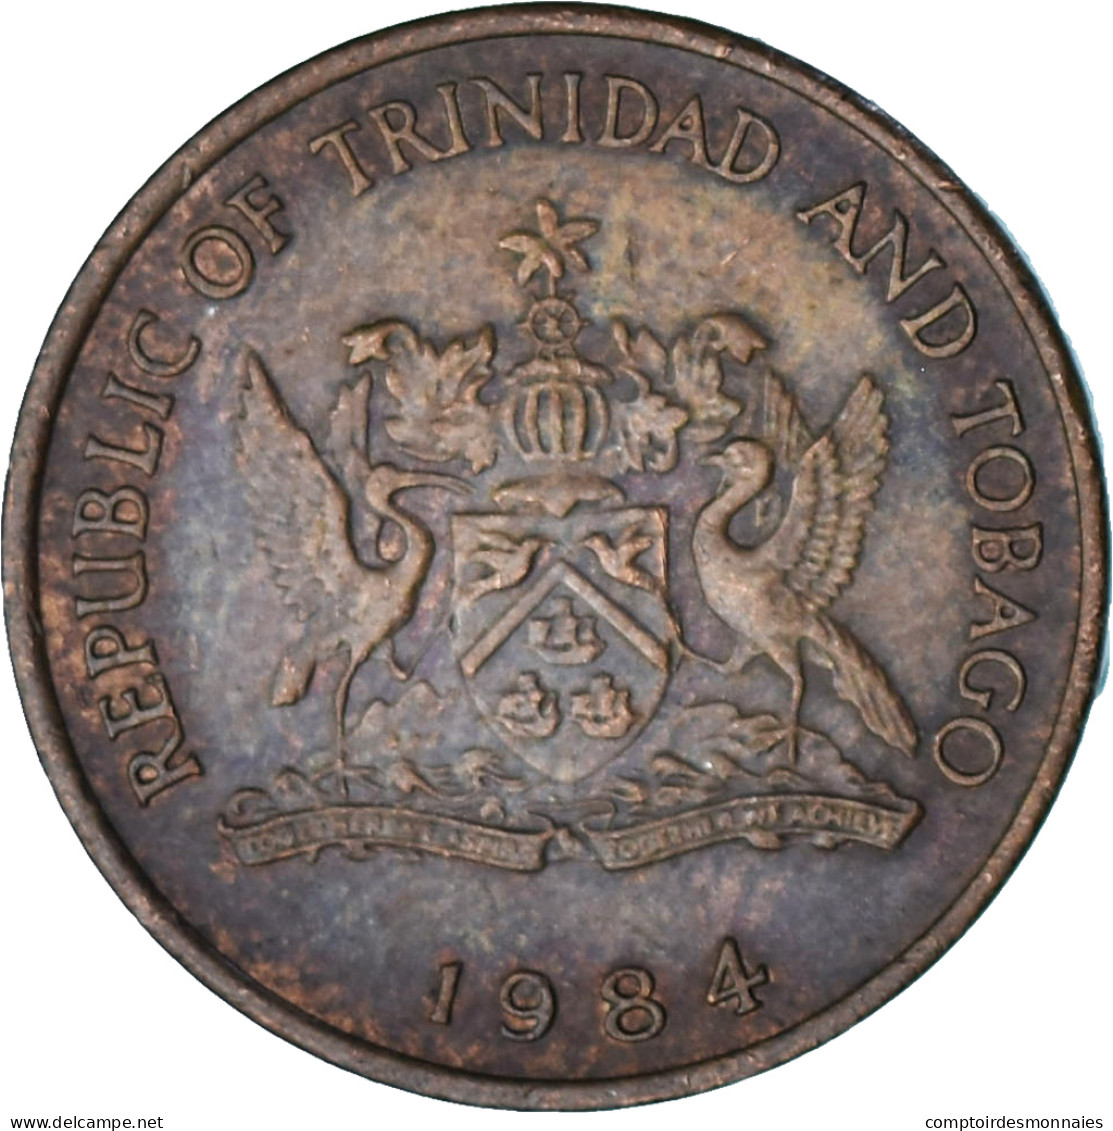 Trinité-et-Tobago, Cent, 1984 - Trindad & Tobago